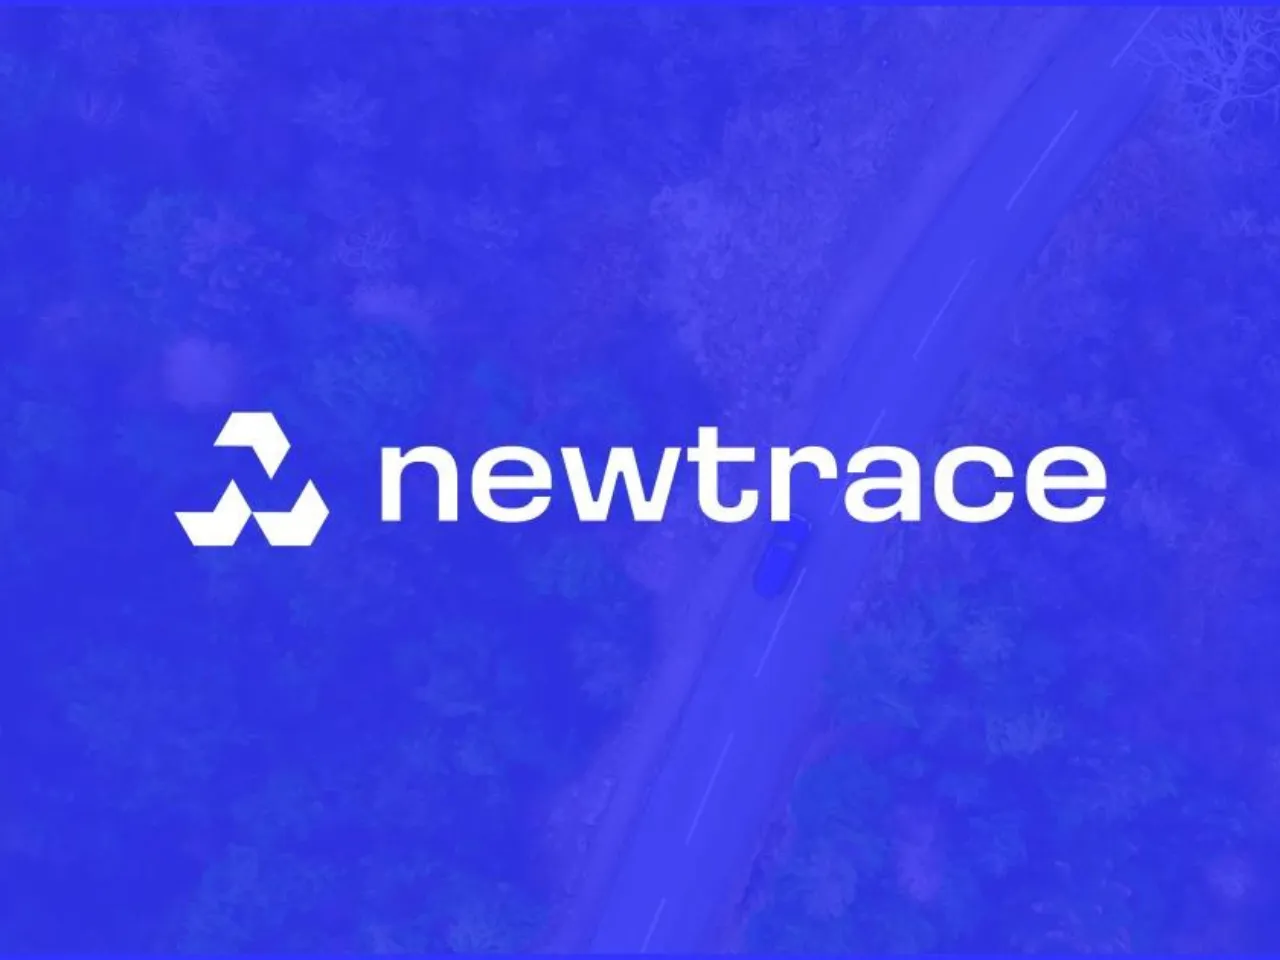 newtrace logo